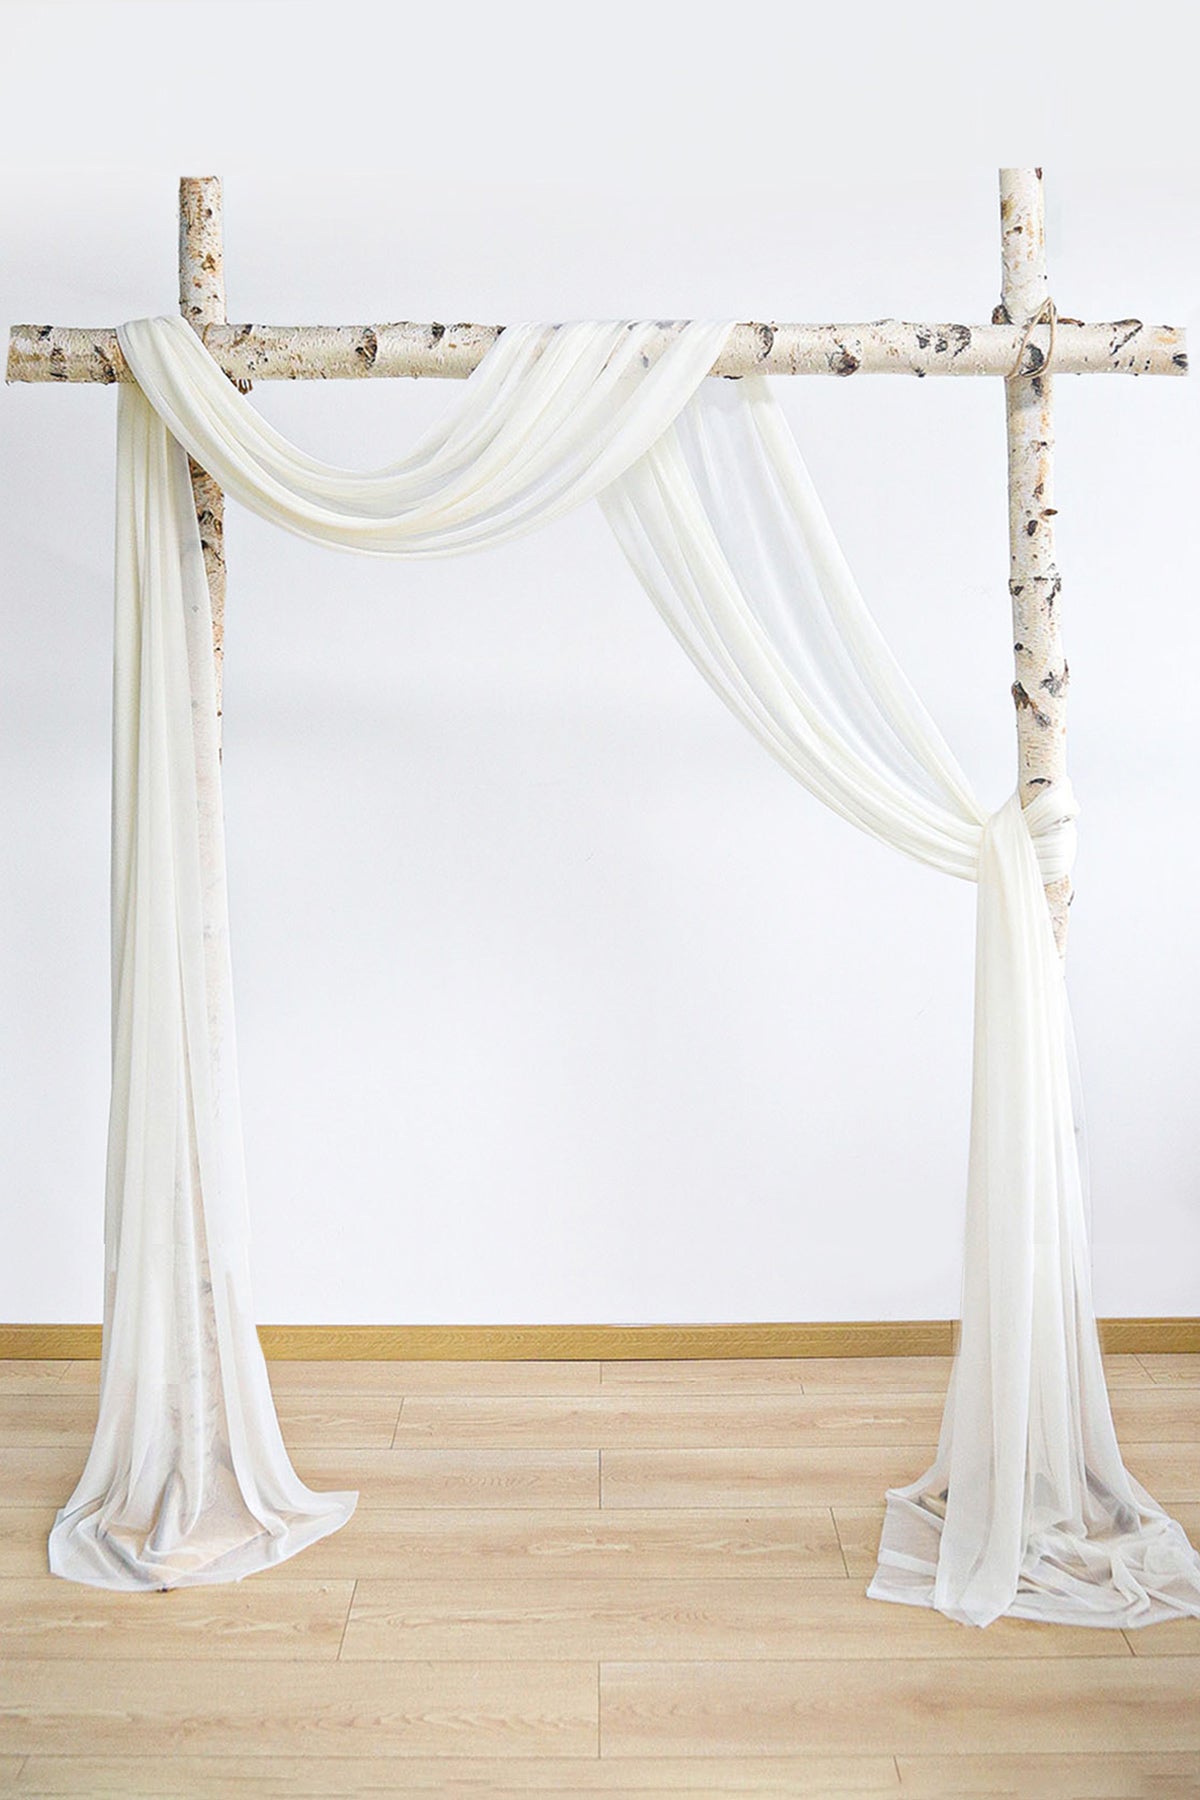 2 Pcs Rustic Wedding Arch Draping 29"w x 19.7ft - Romantic Ivory